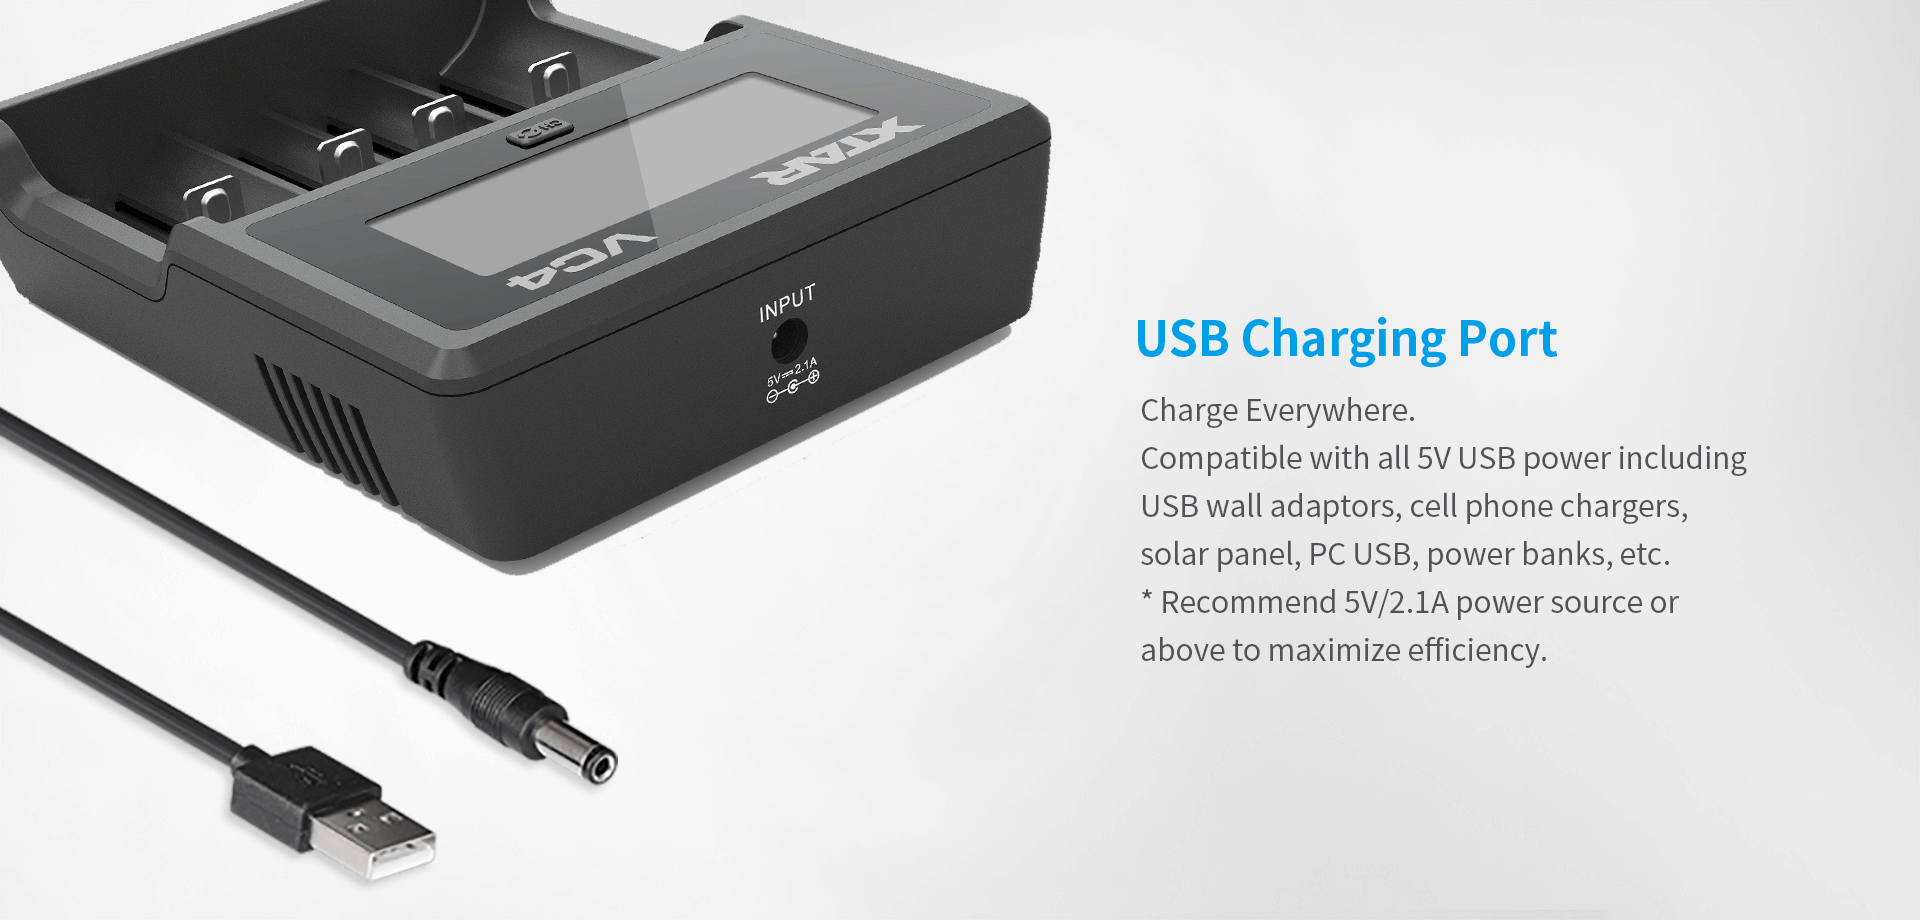 XTAR VC4 Charger | USB Charging Port